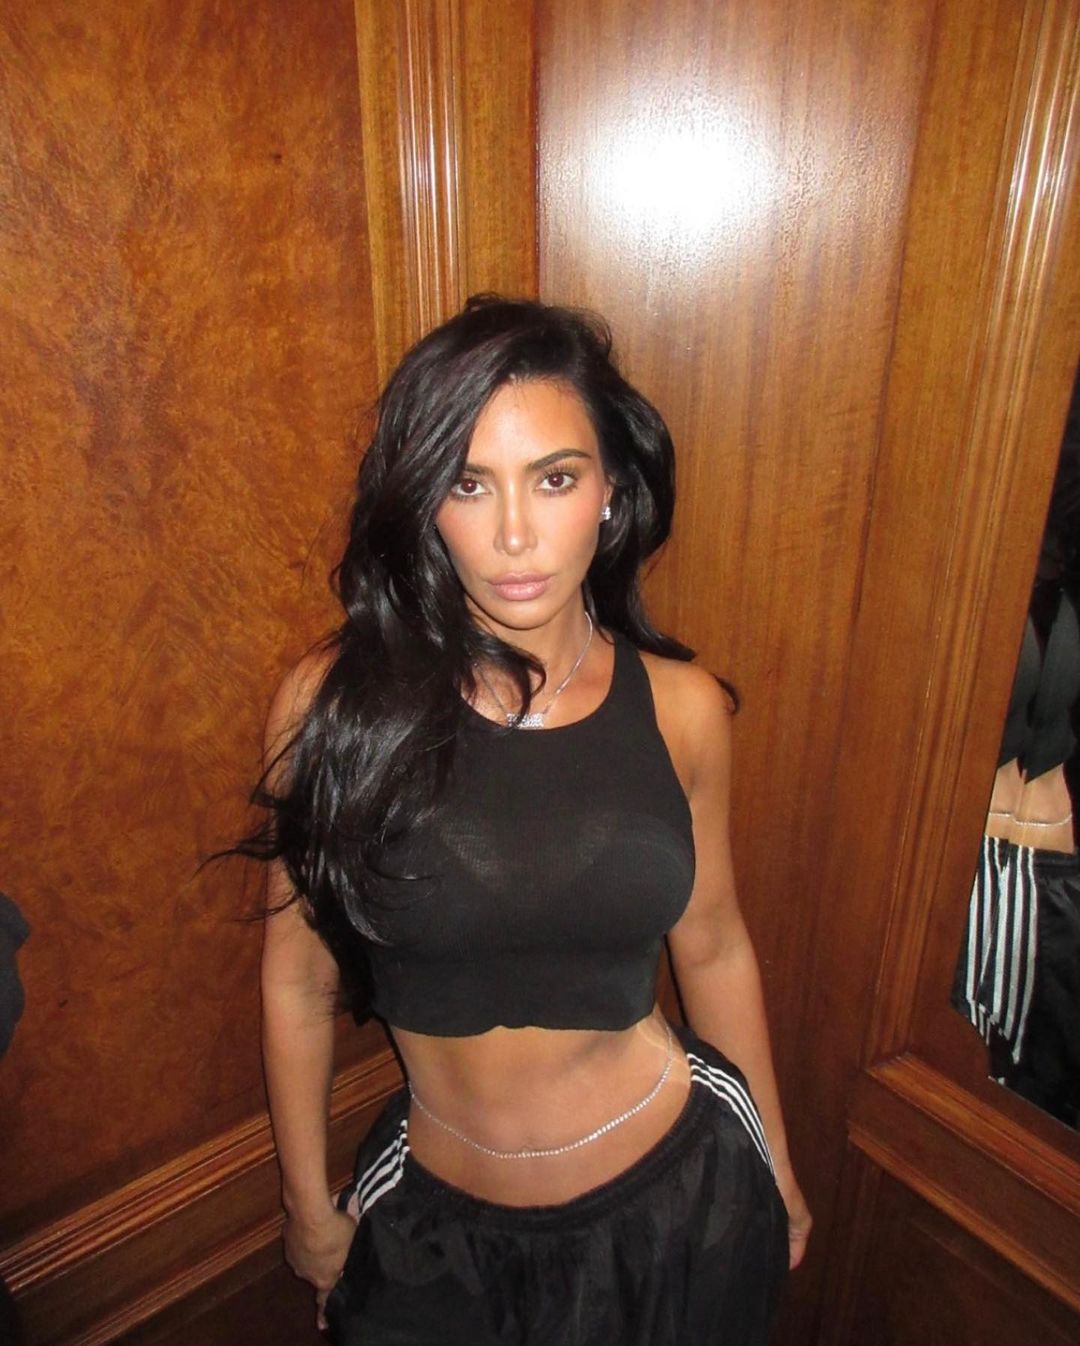 Page Six on X: Kim Kardashian models thong bikini, belly chain in